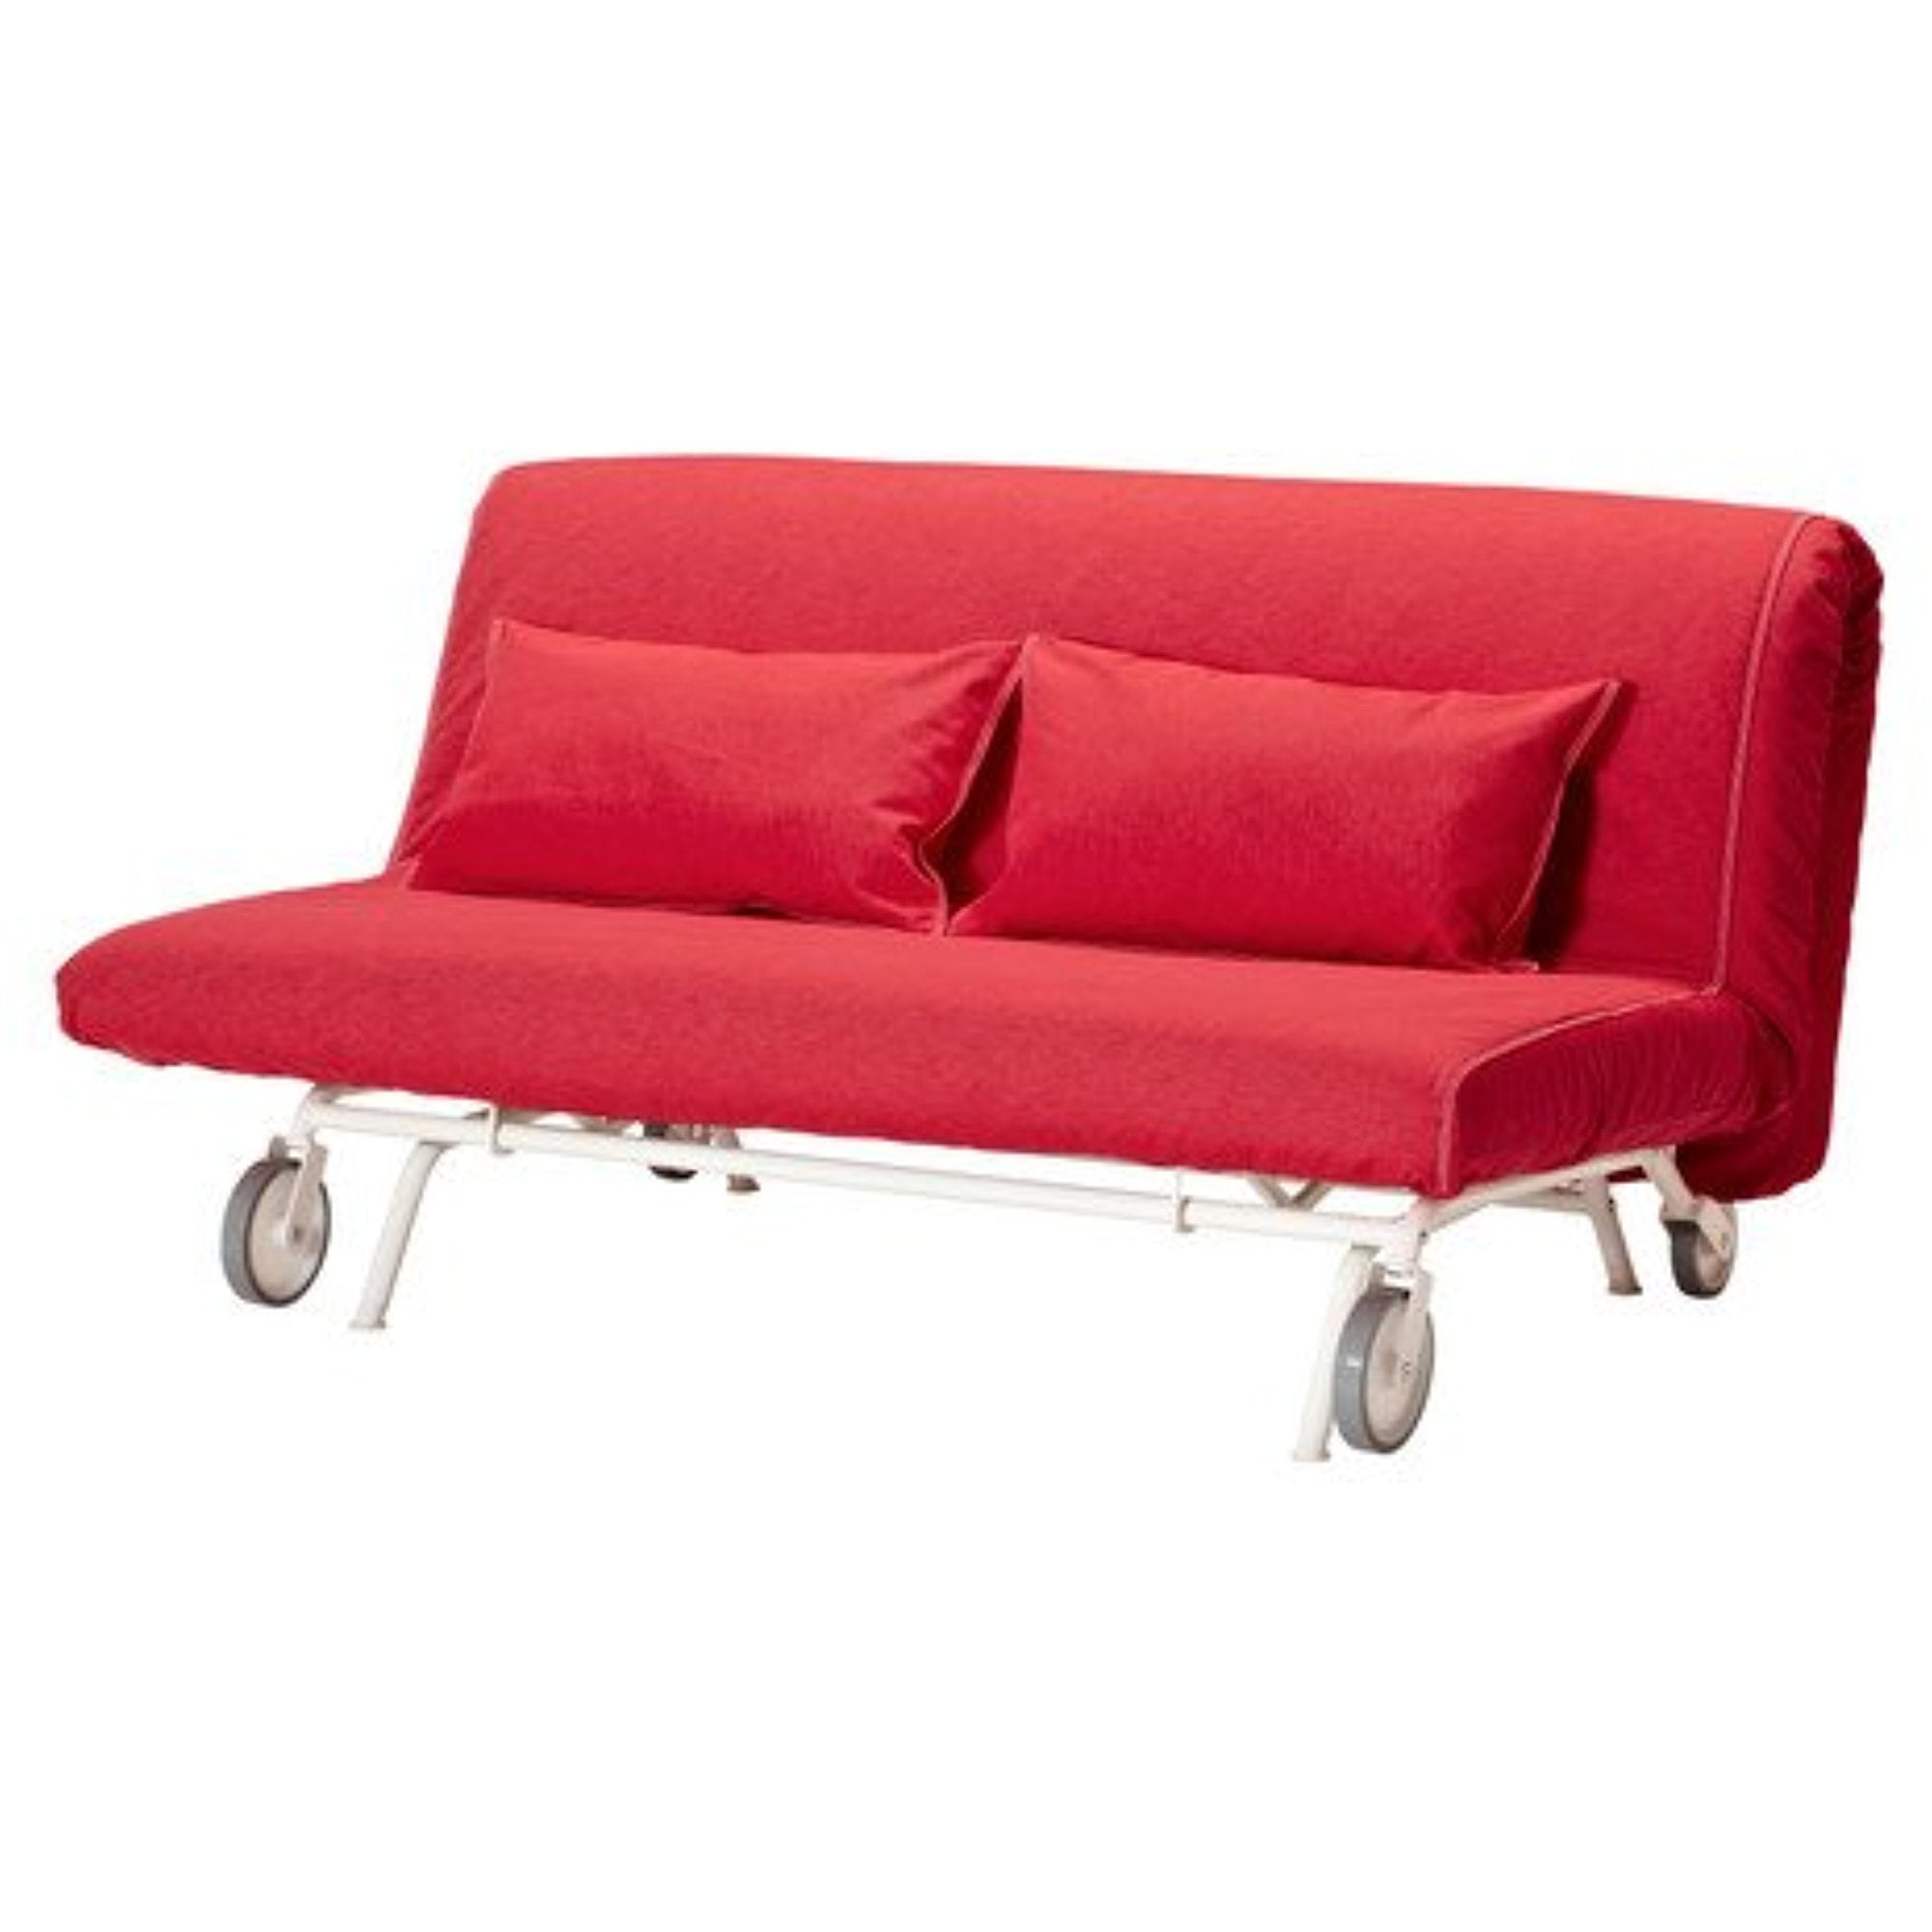 Ikea Sleeper sofa, Vansta red - Walmart.com